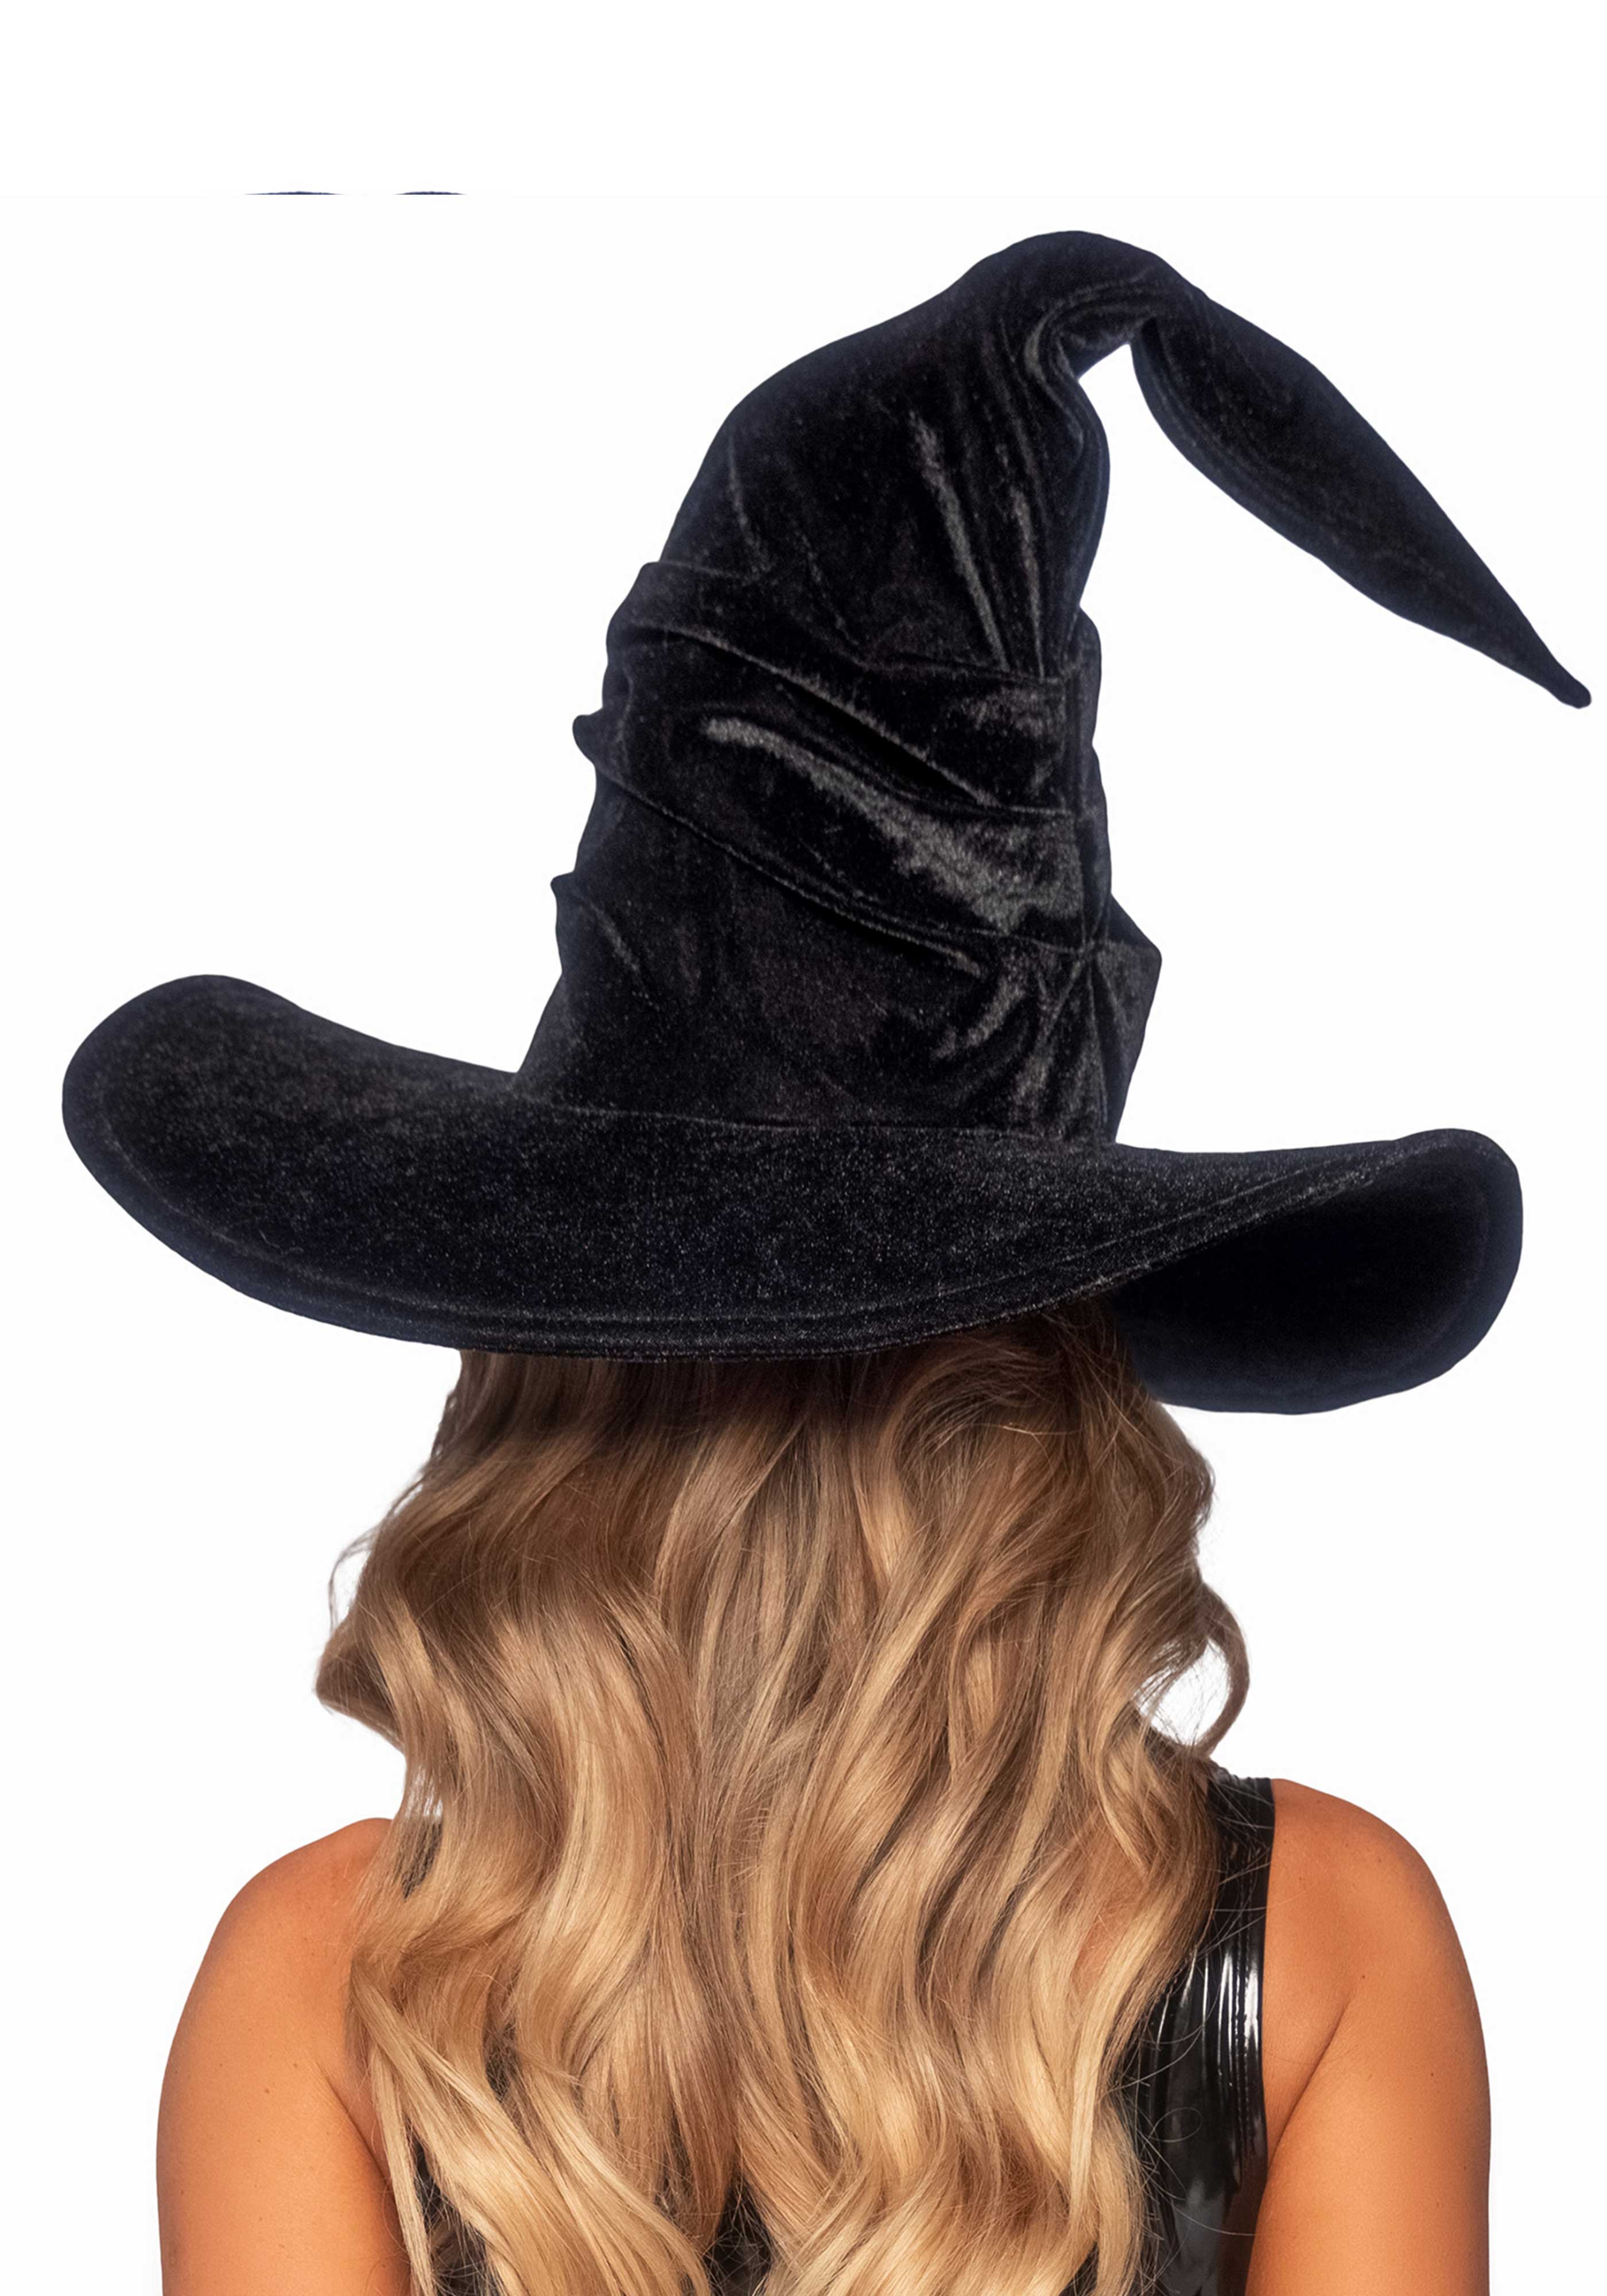 Leg Avenue A2903 Velvet ruched witch hat